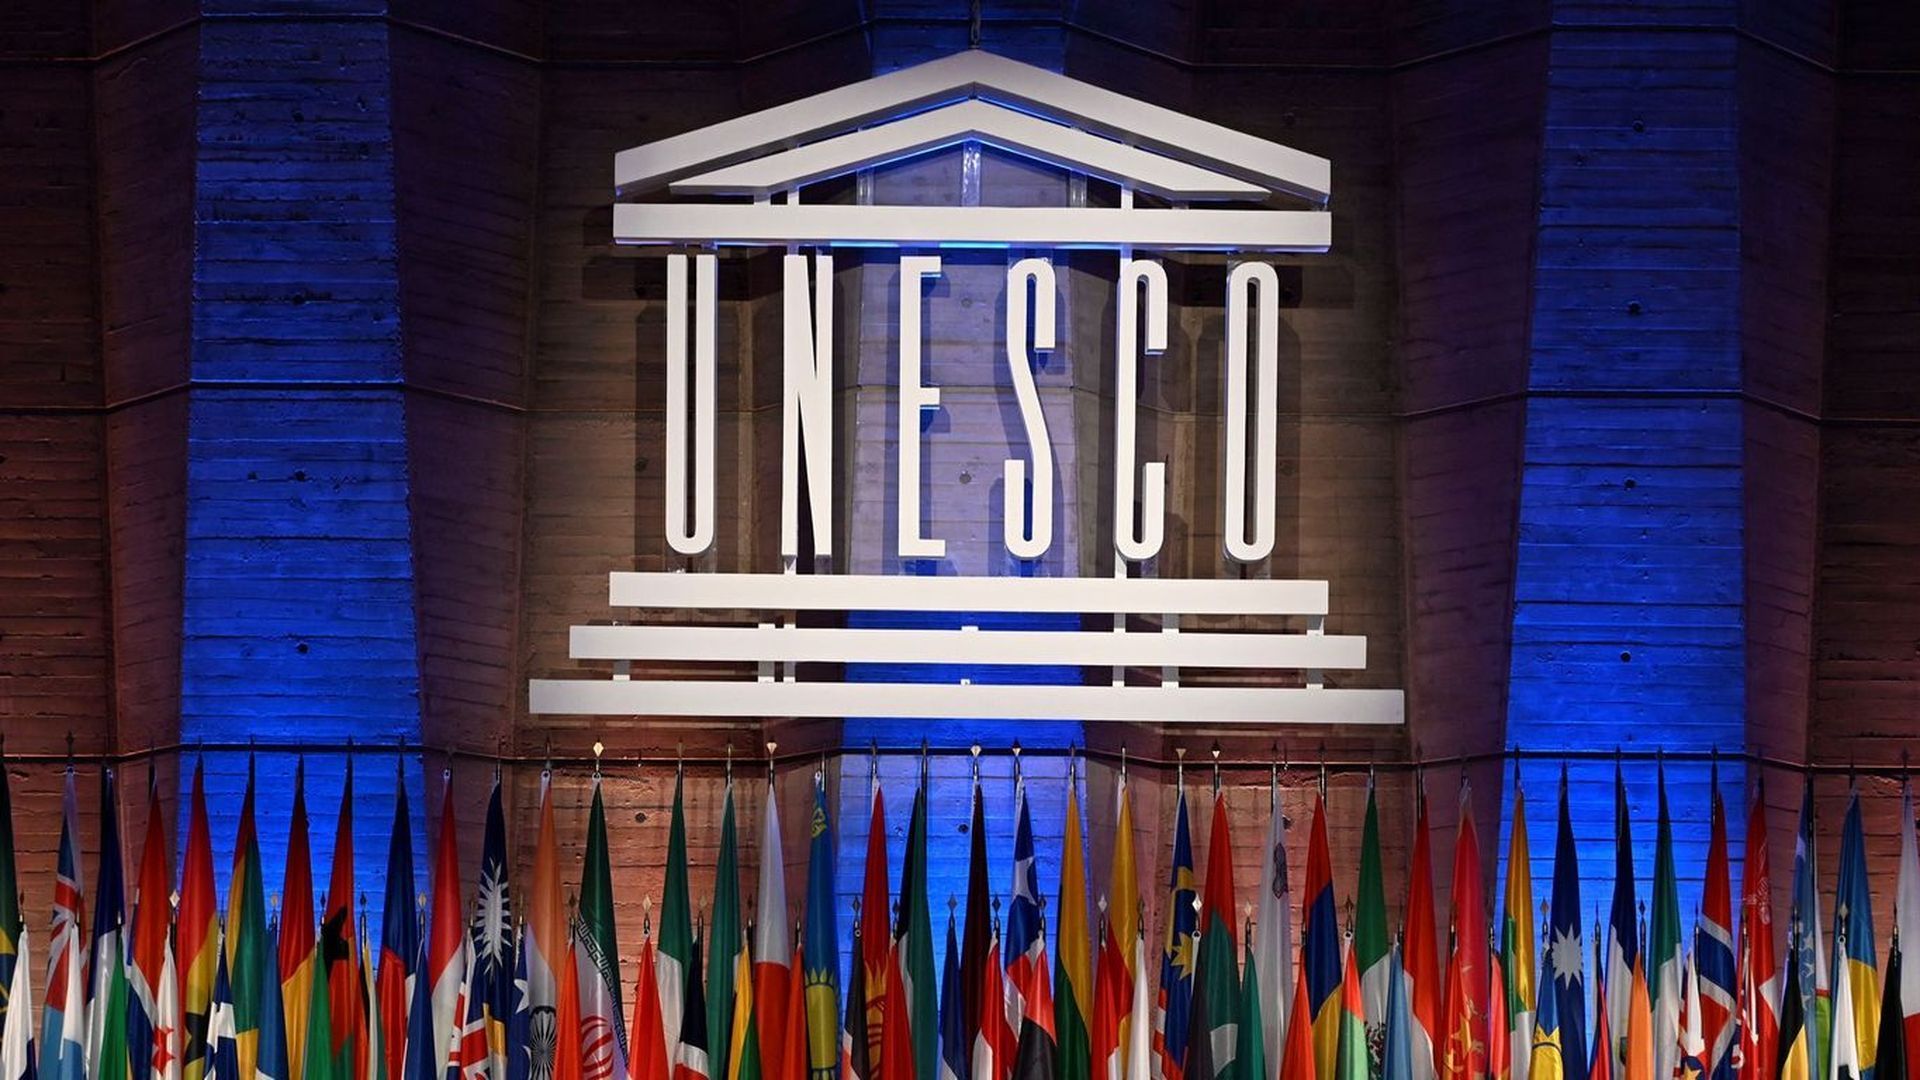 A general view of the UNESCO meeting in November 2019 in Paris. Photo: Mustafa Yalcin/Anadolu Agency via Getty Images